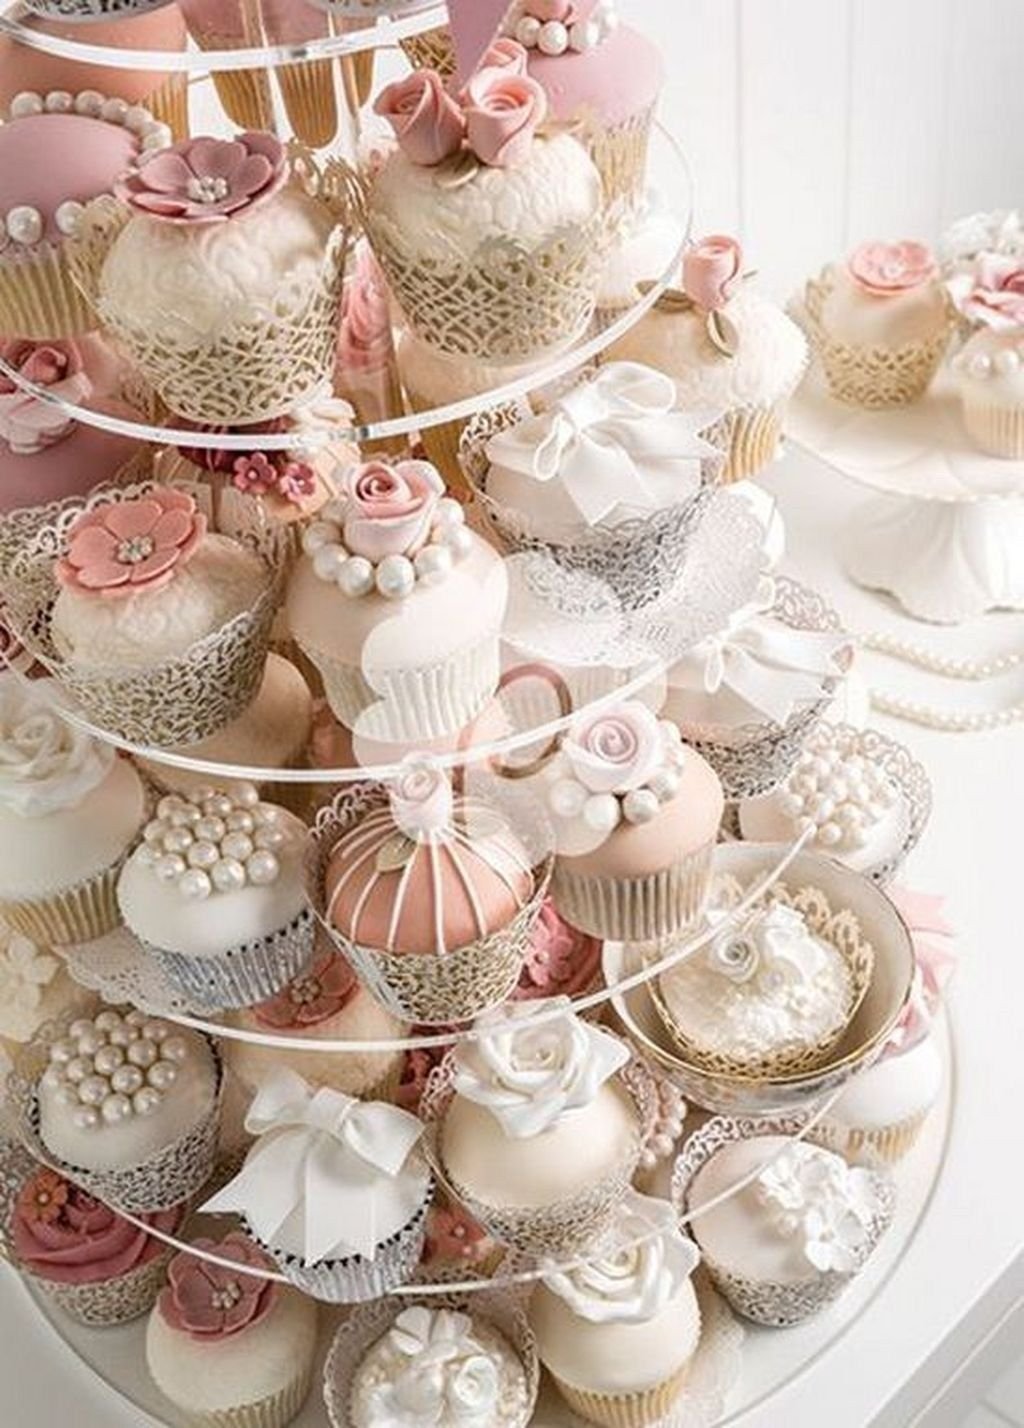 Тортик капкейки. Свадебные капкейки. Свадебные пирожные. Свадебный торт и капкейки. Торт с капкейками.